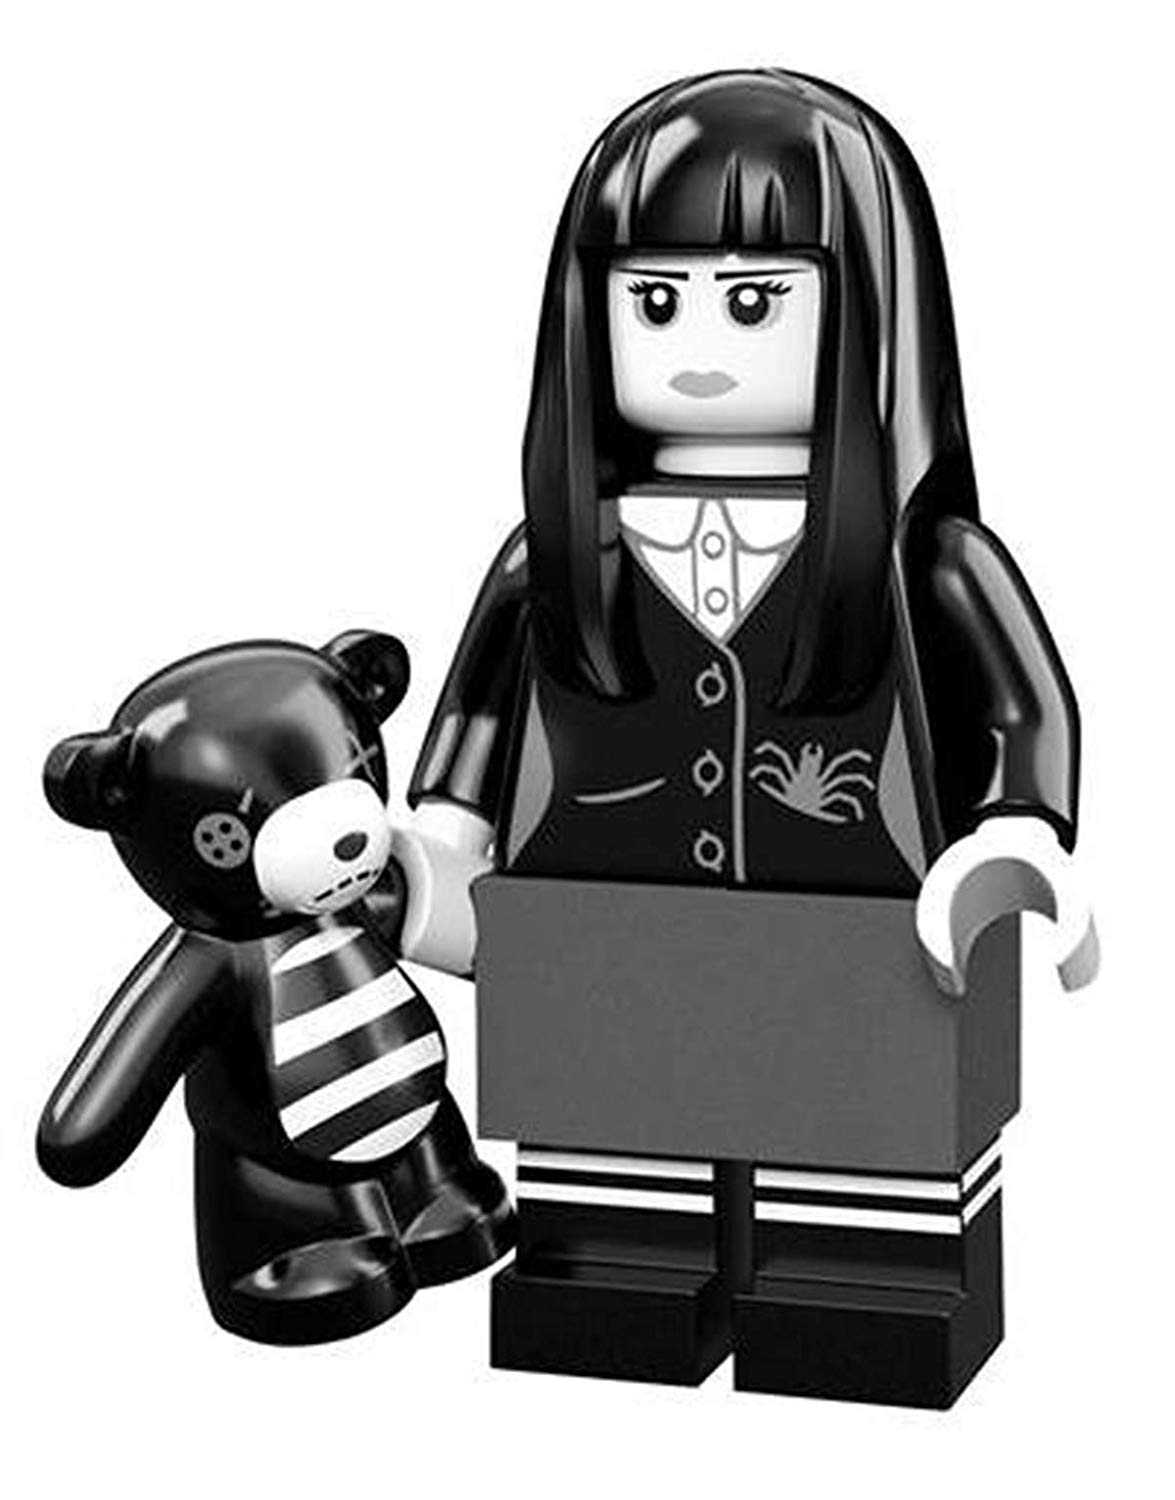 Lego Minifigure - Series 12 - Spooky Girl - 71007